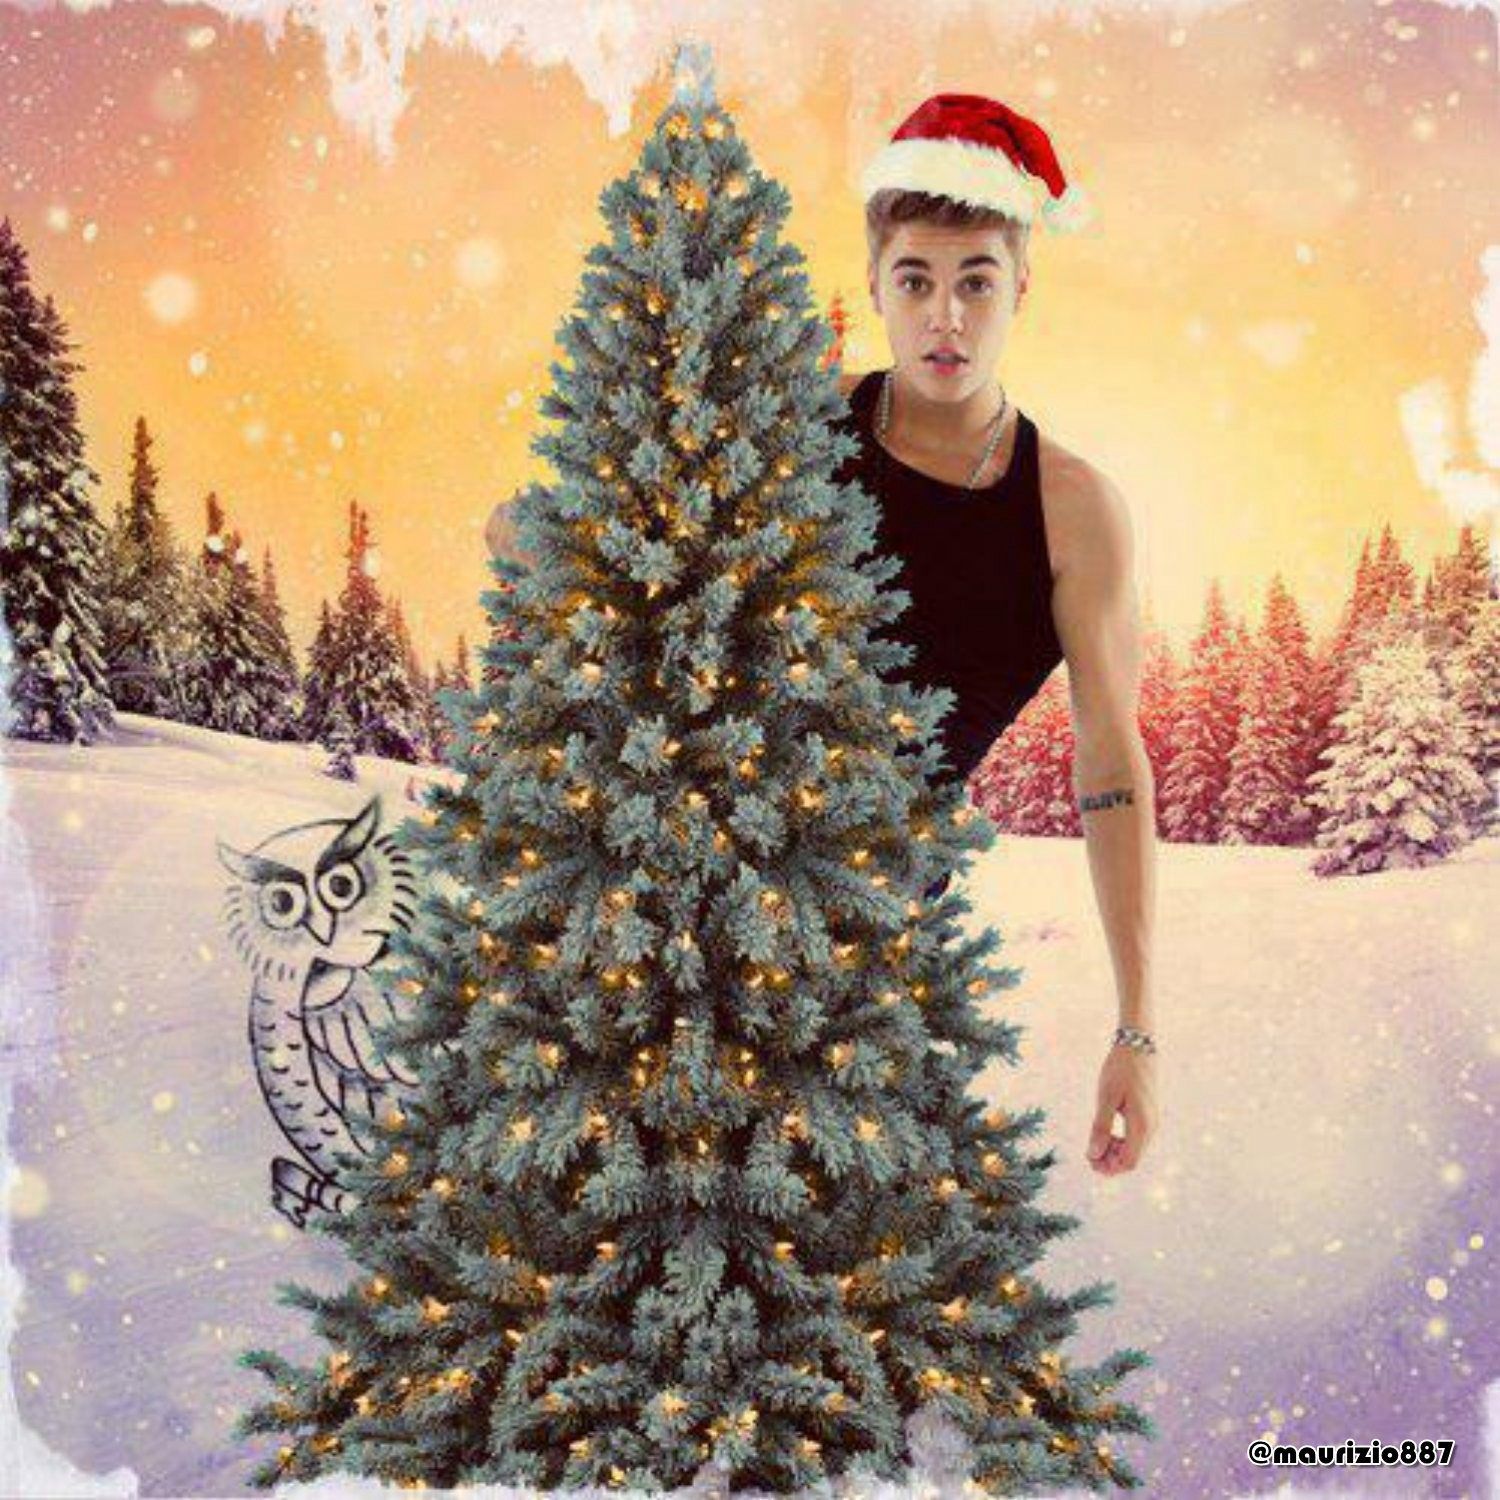 Justin Bieber Christmas Tree Decorations